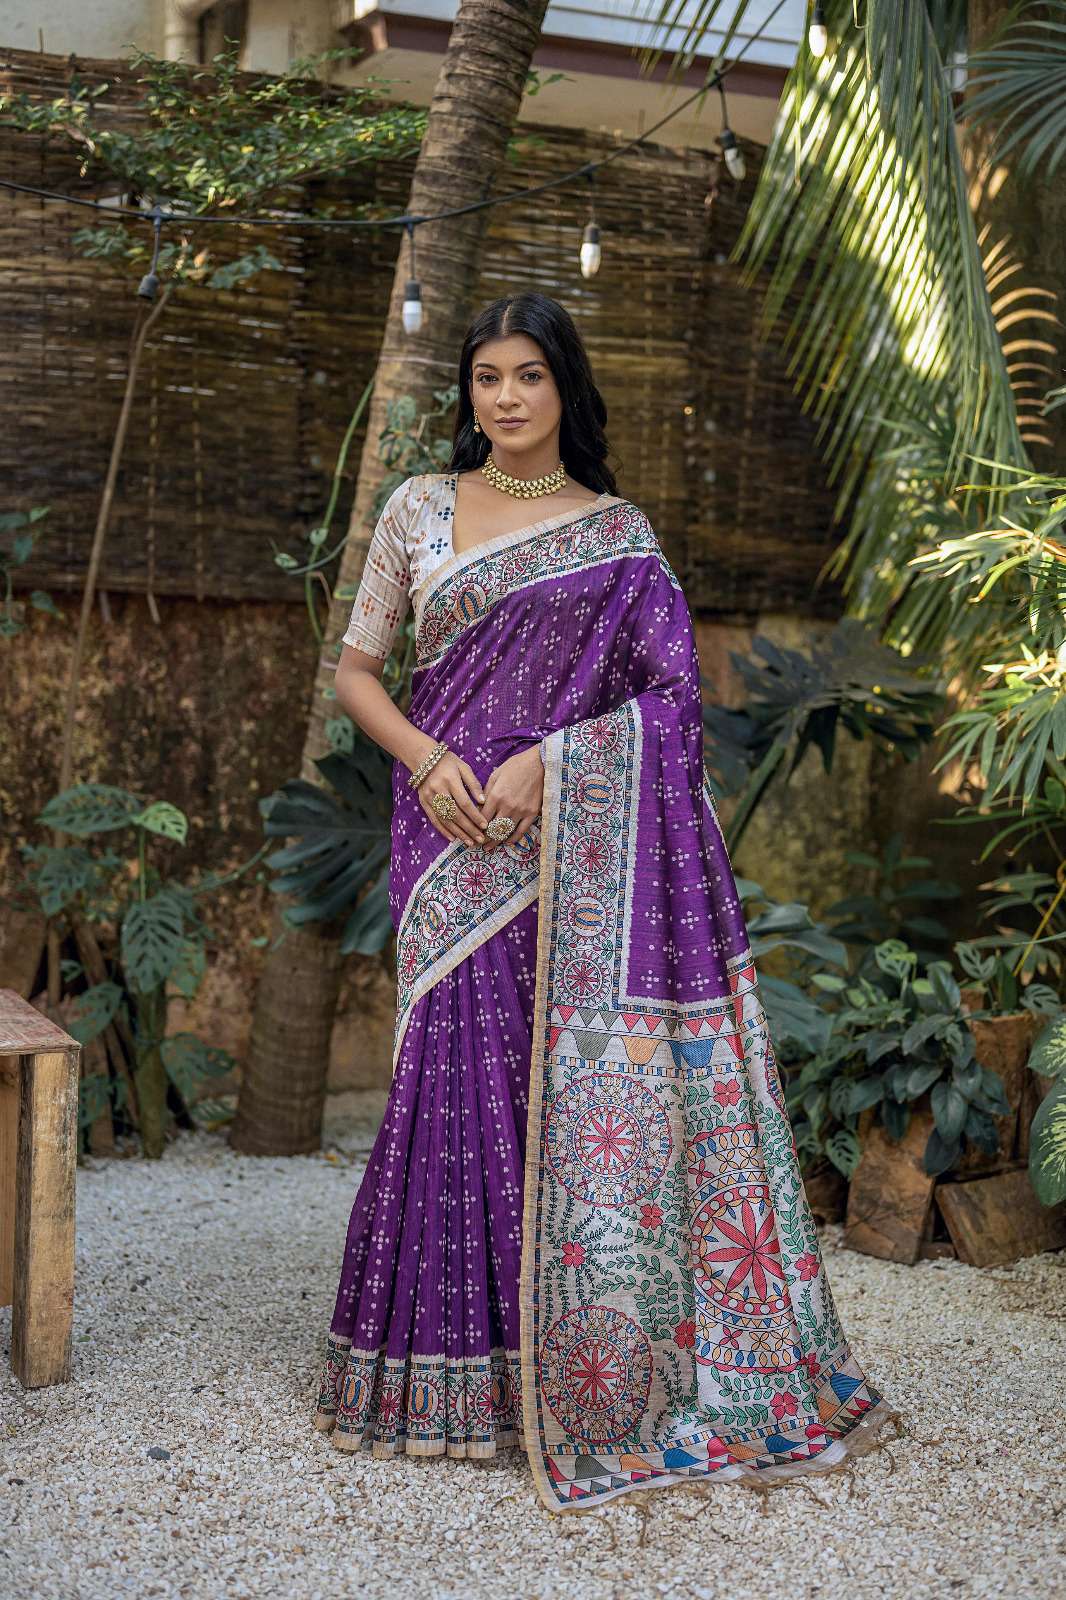  Madhubani Beautiful Stylish Fancy Colorful Party Wear & Occasional Wear Soft Sarees At Wholesale Price